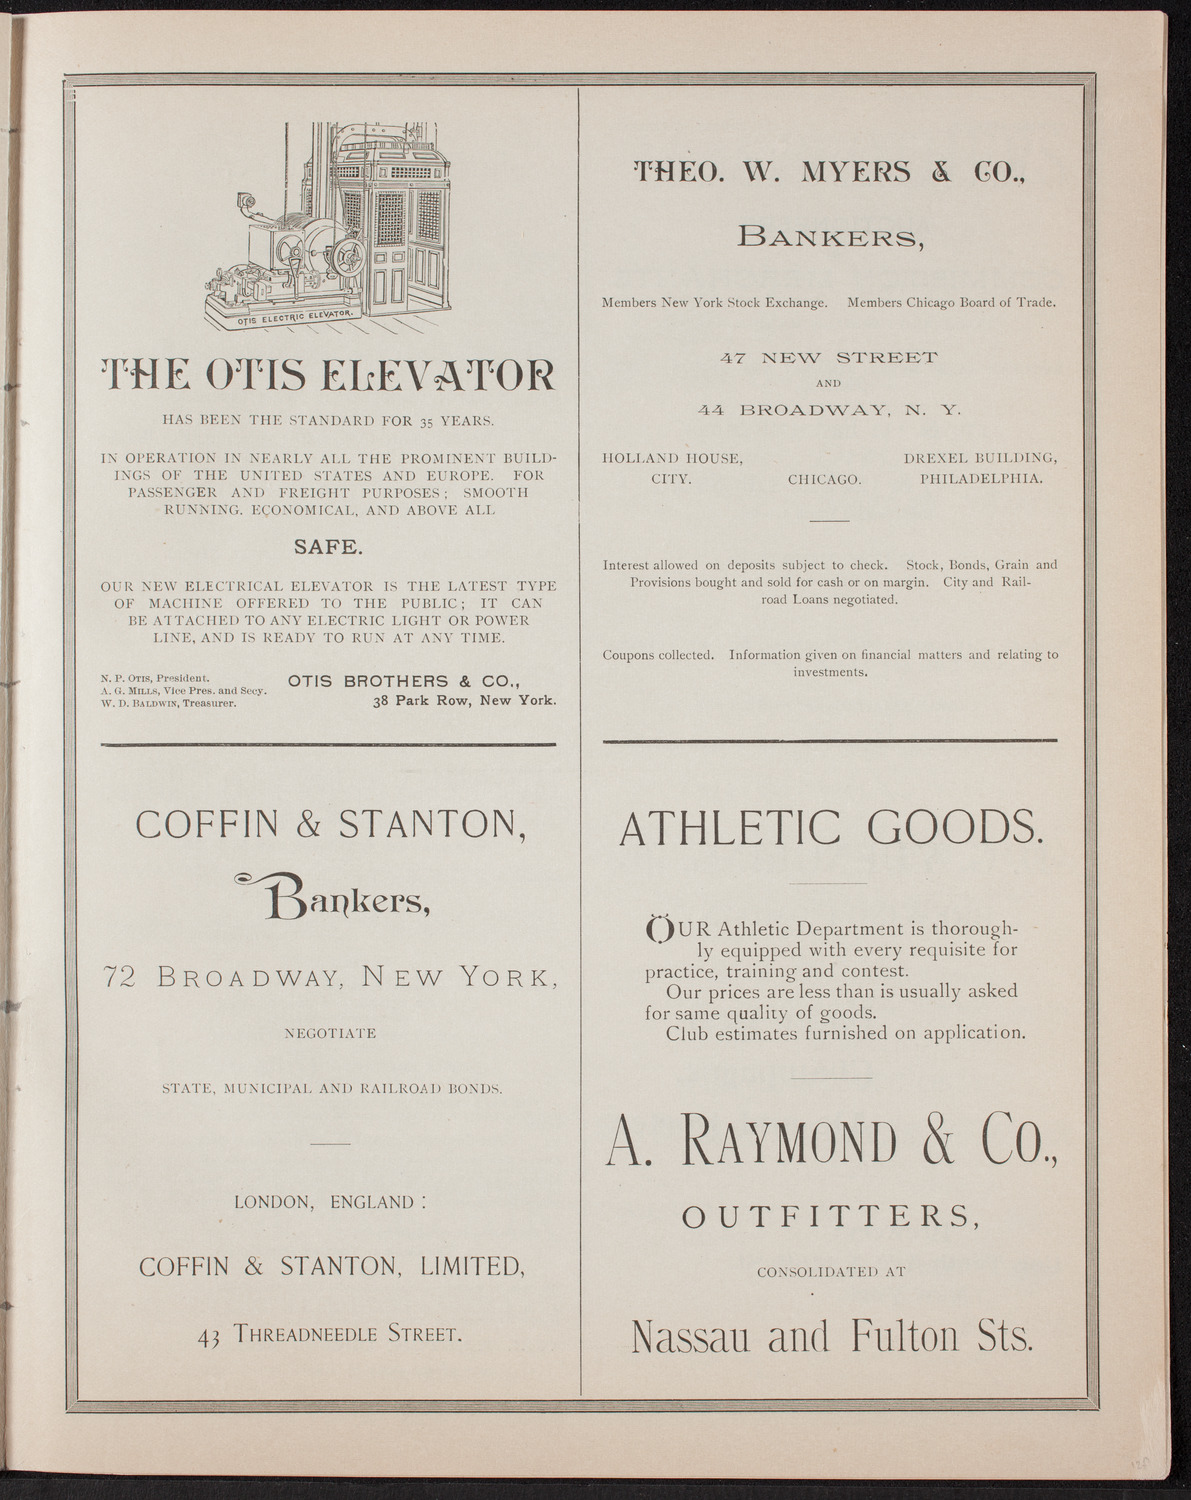 New York Athletic Club Minstrel Show, November 30, 1892, program page 13